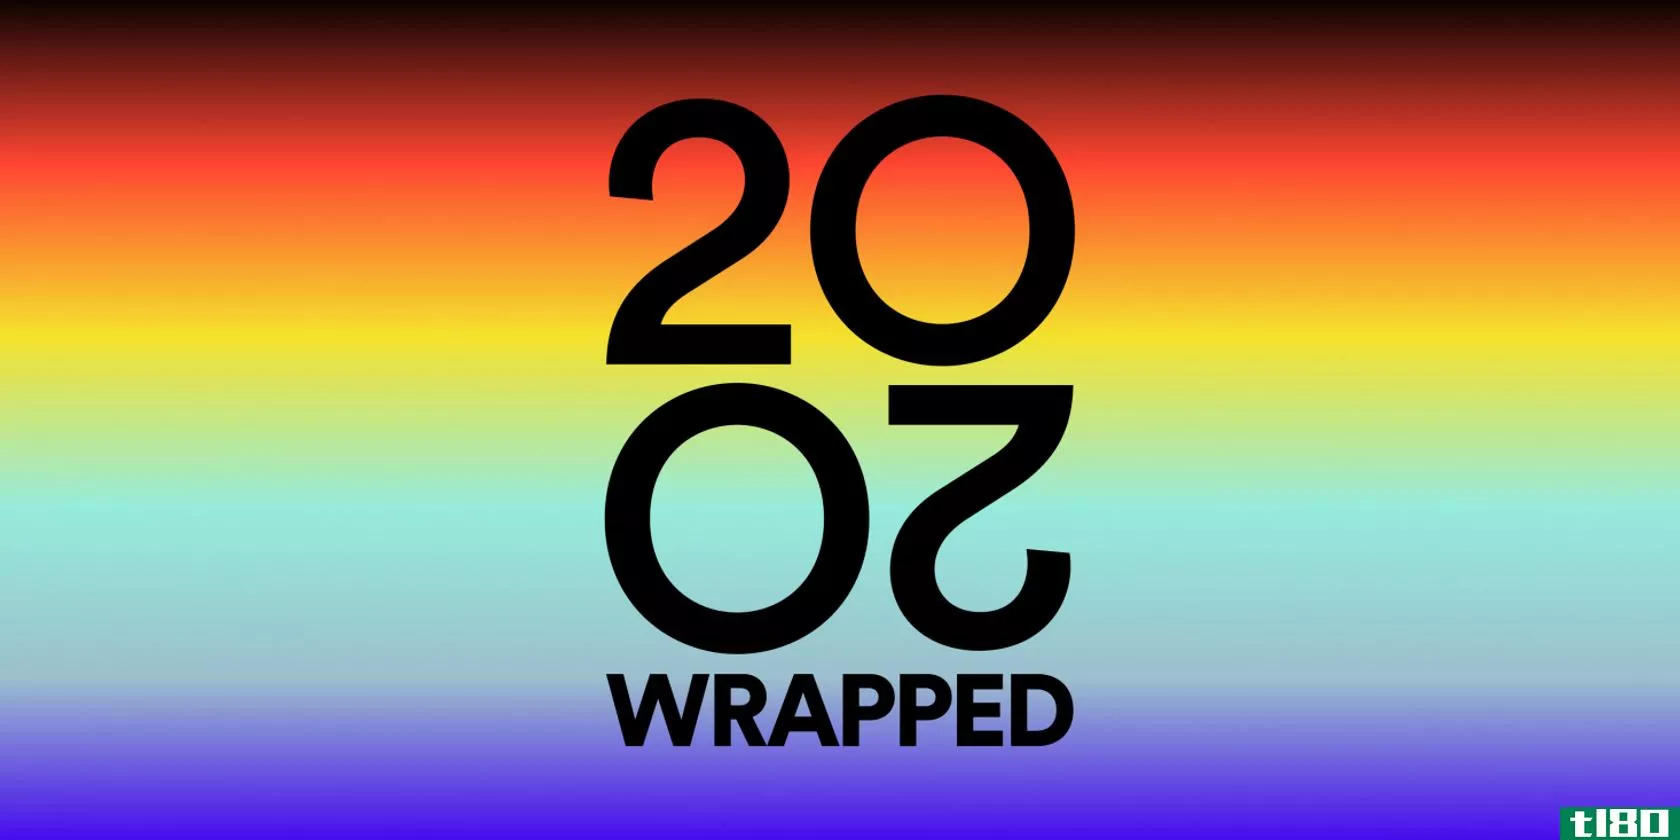 spotify 2020 wrapped